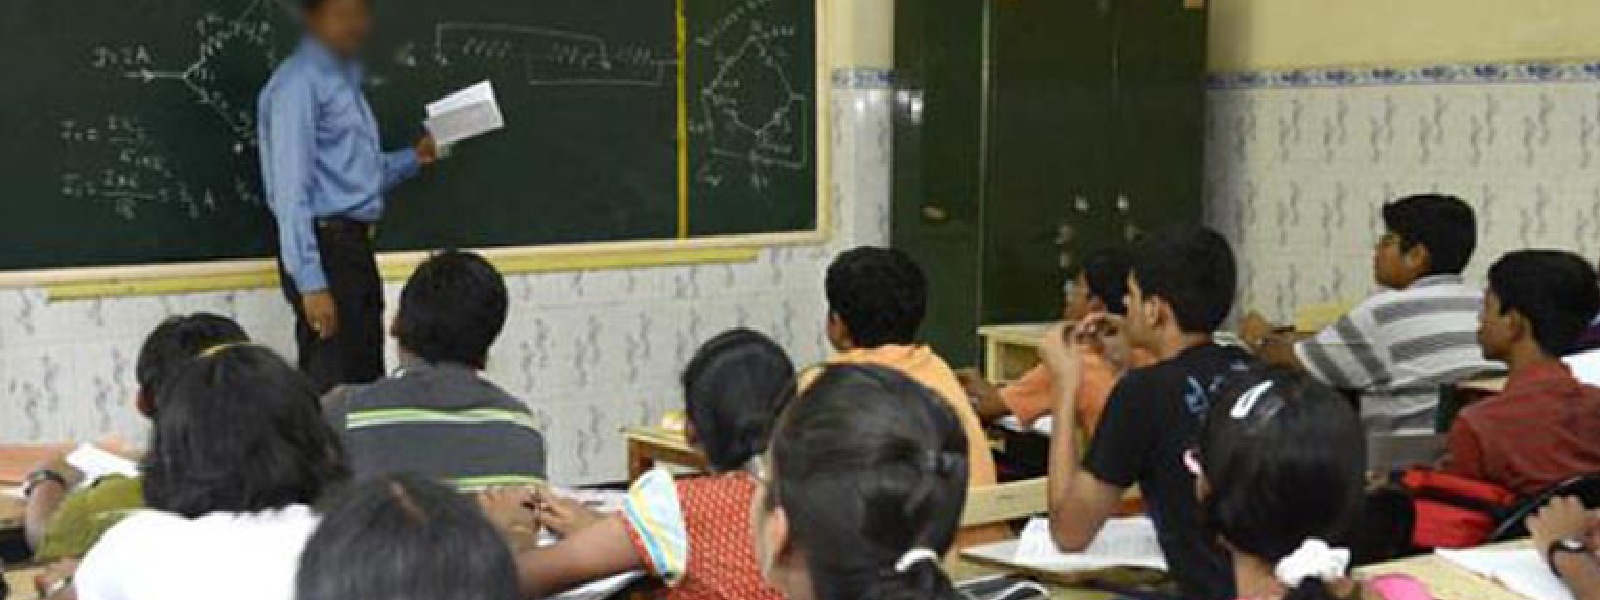 Jaffna tuition banned on Friday evenings & Sundays